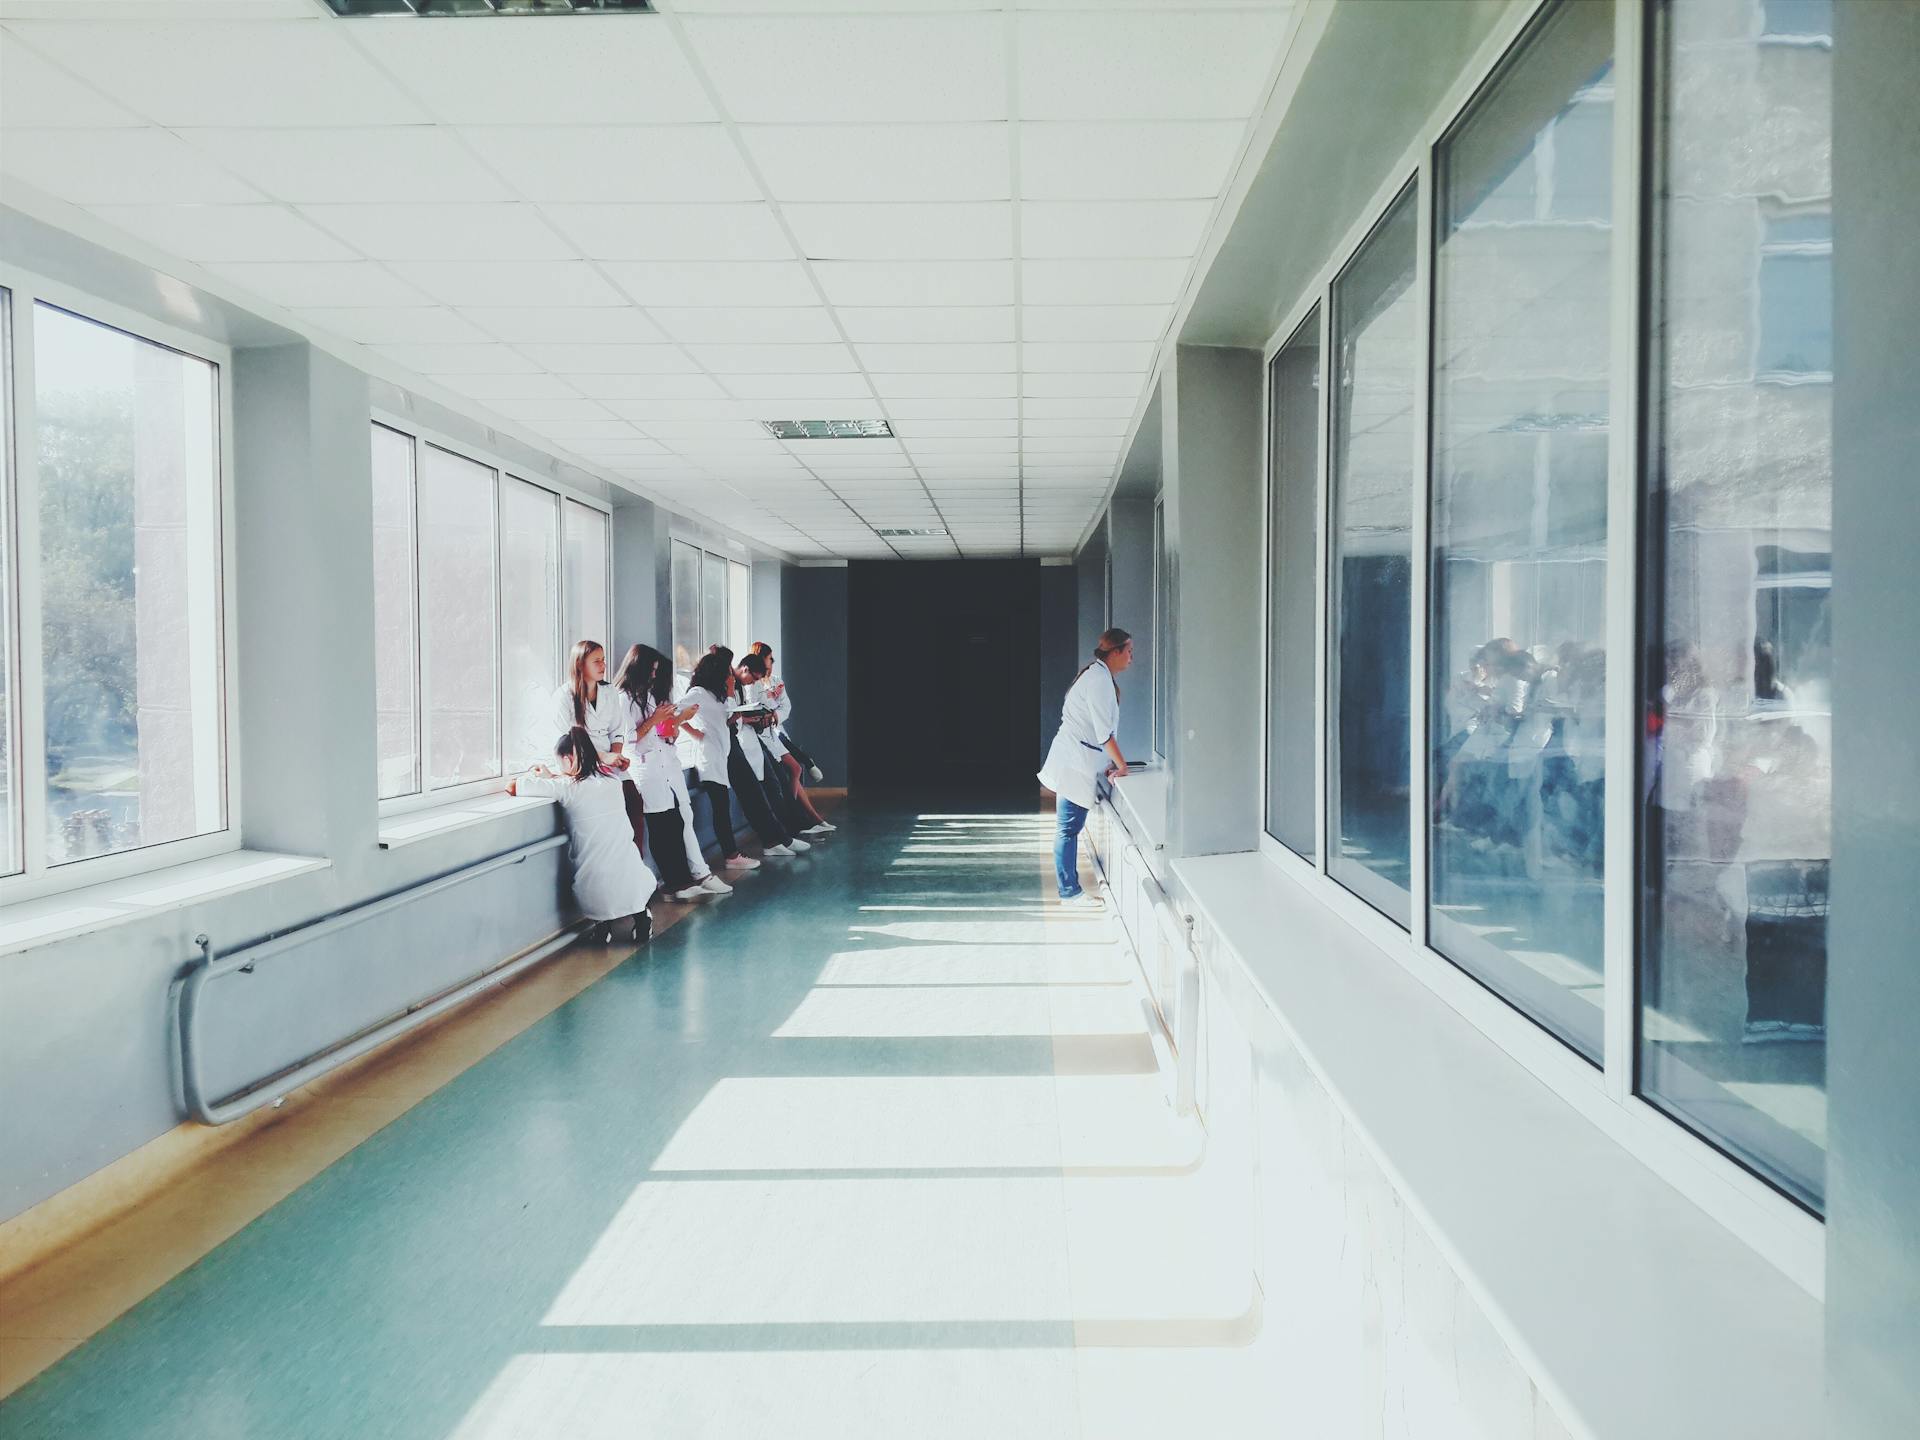 A hospital hallway | Source: Pexels